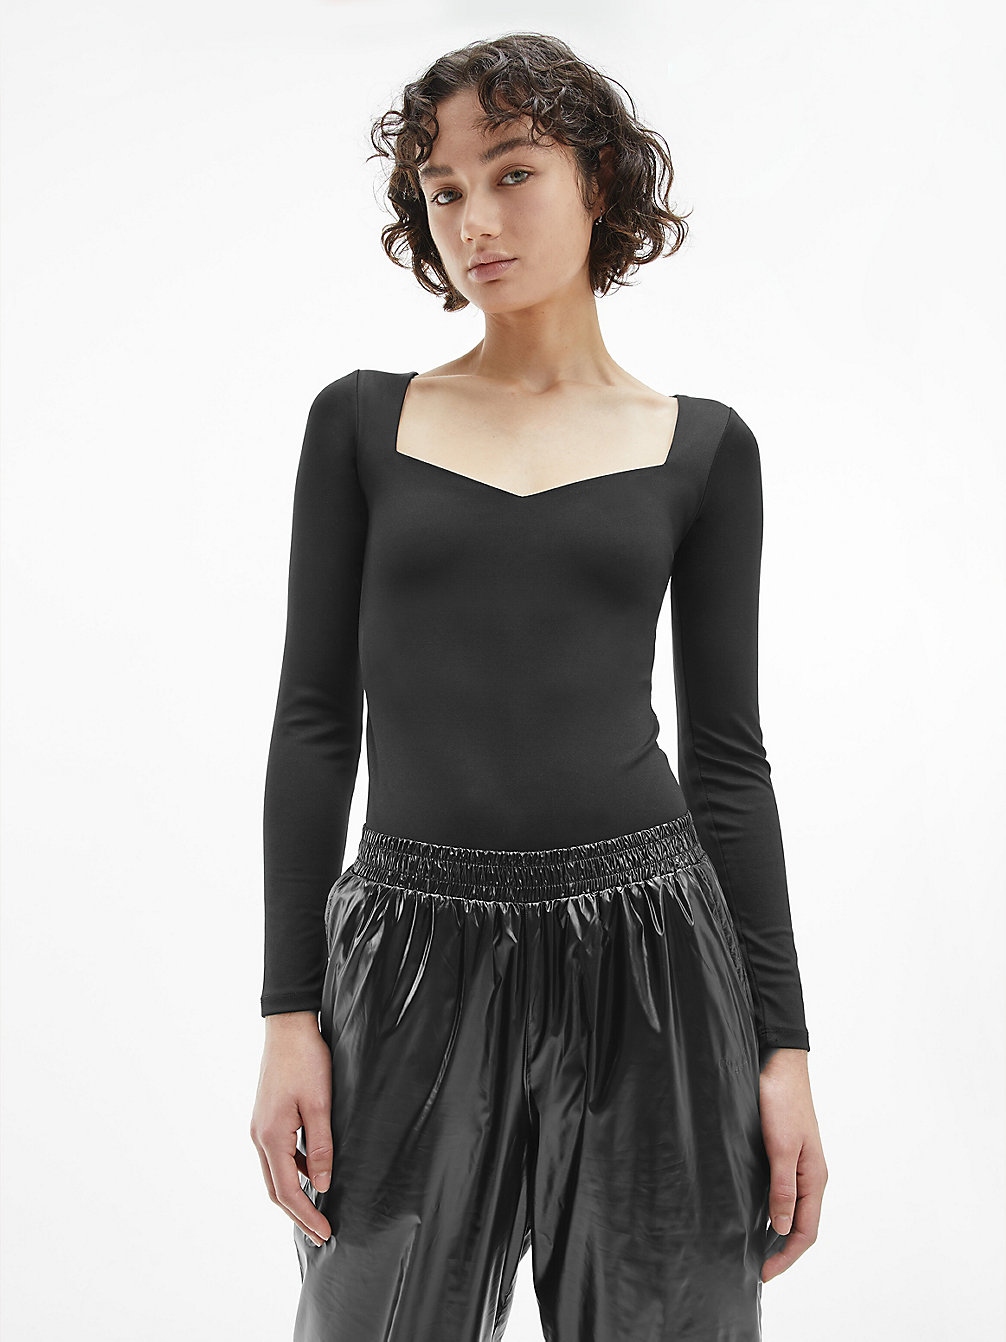 CK BLACK Long Sleeve Bodysuit undefined women Calvin Klein